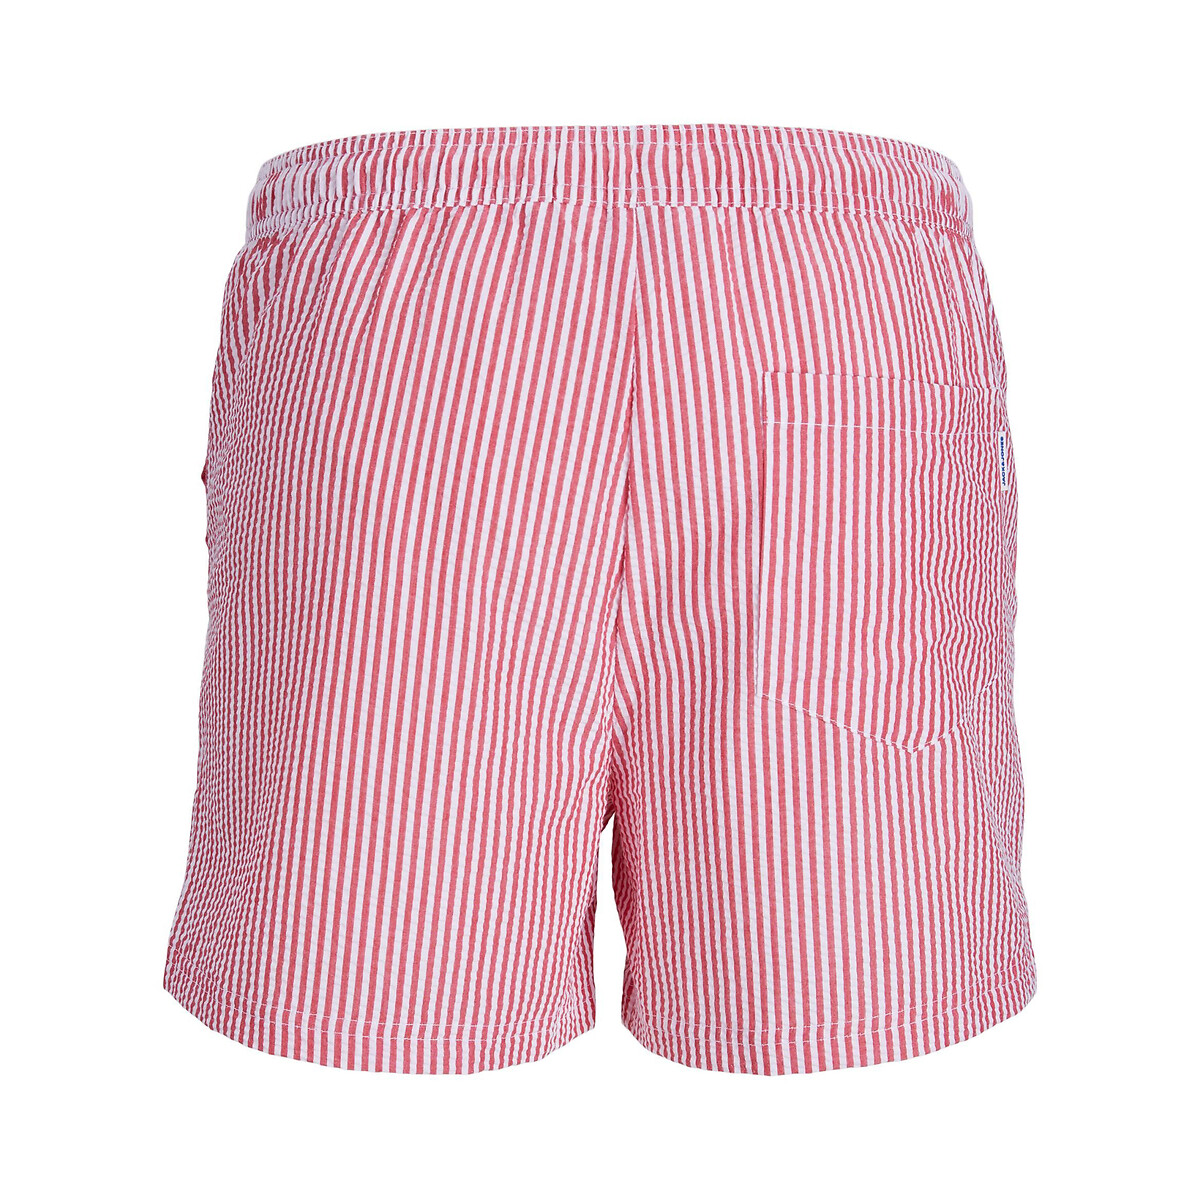 Striped Swim Shorts in Cotton Mix